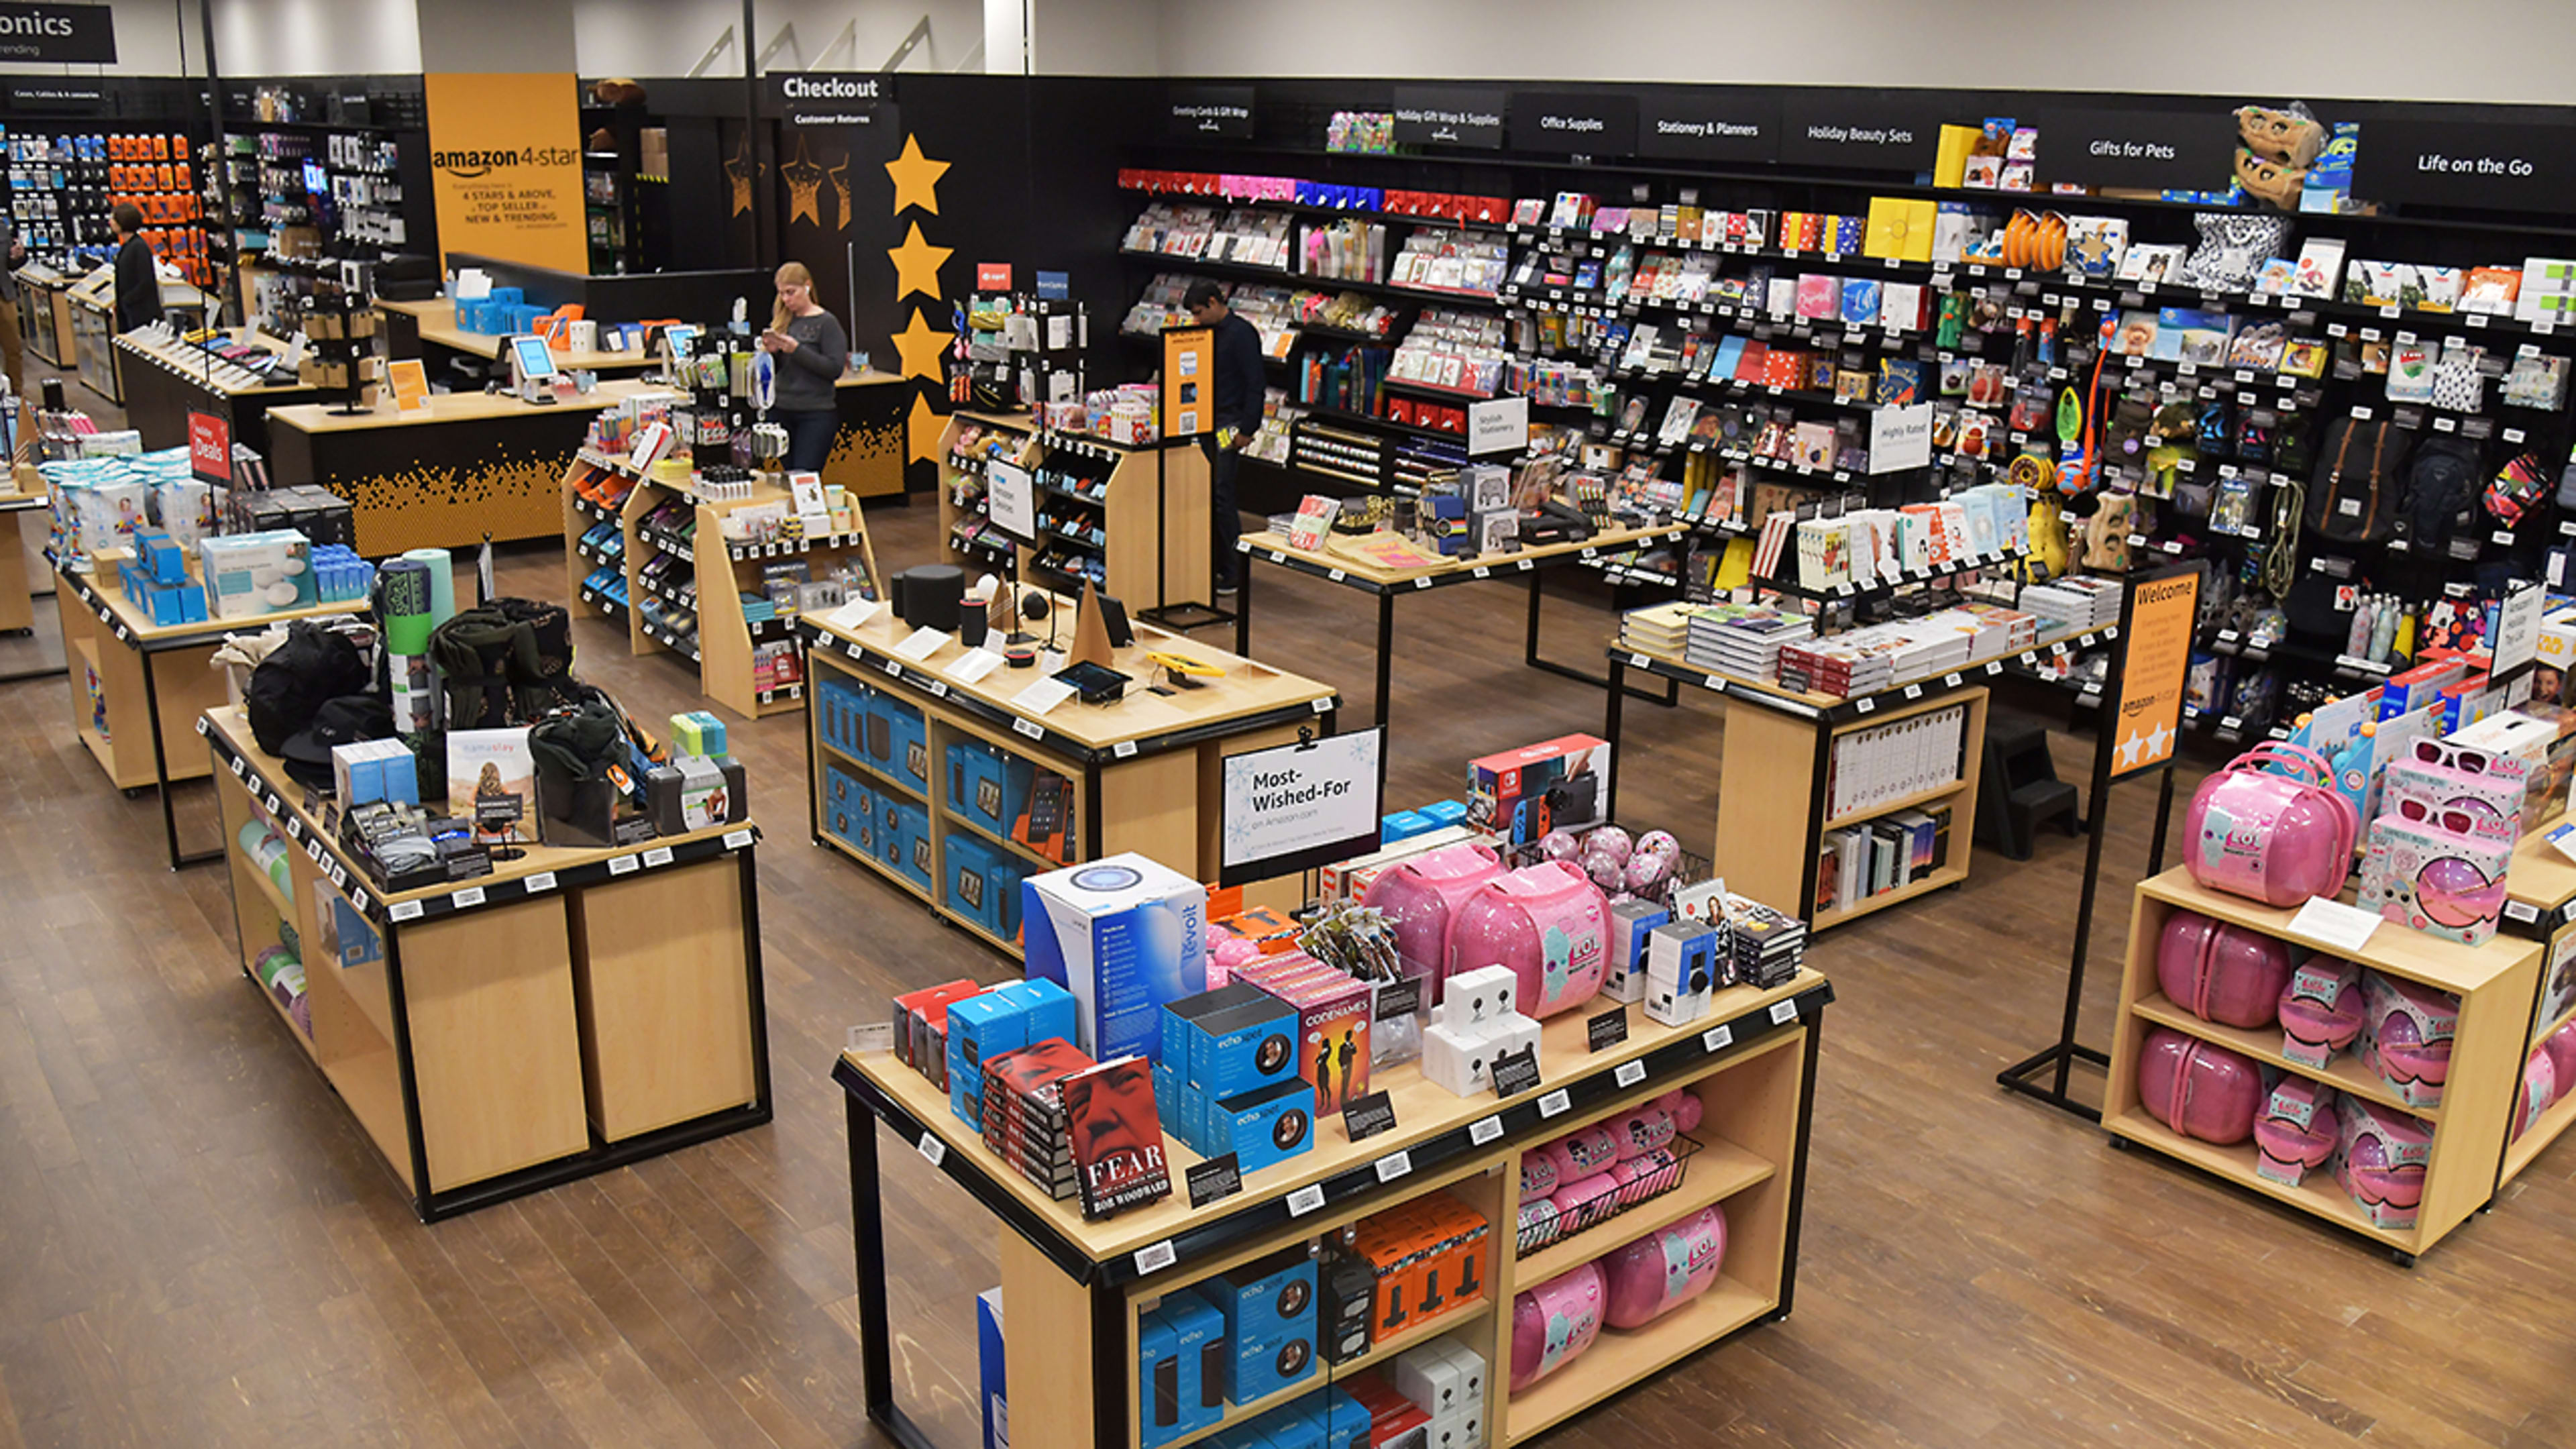 Amazon opens second 4-star store in Colorado